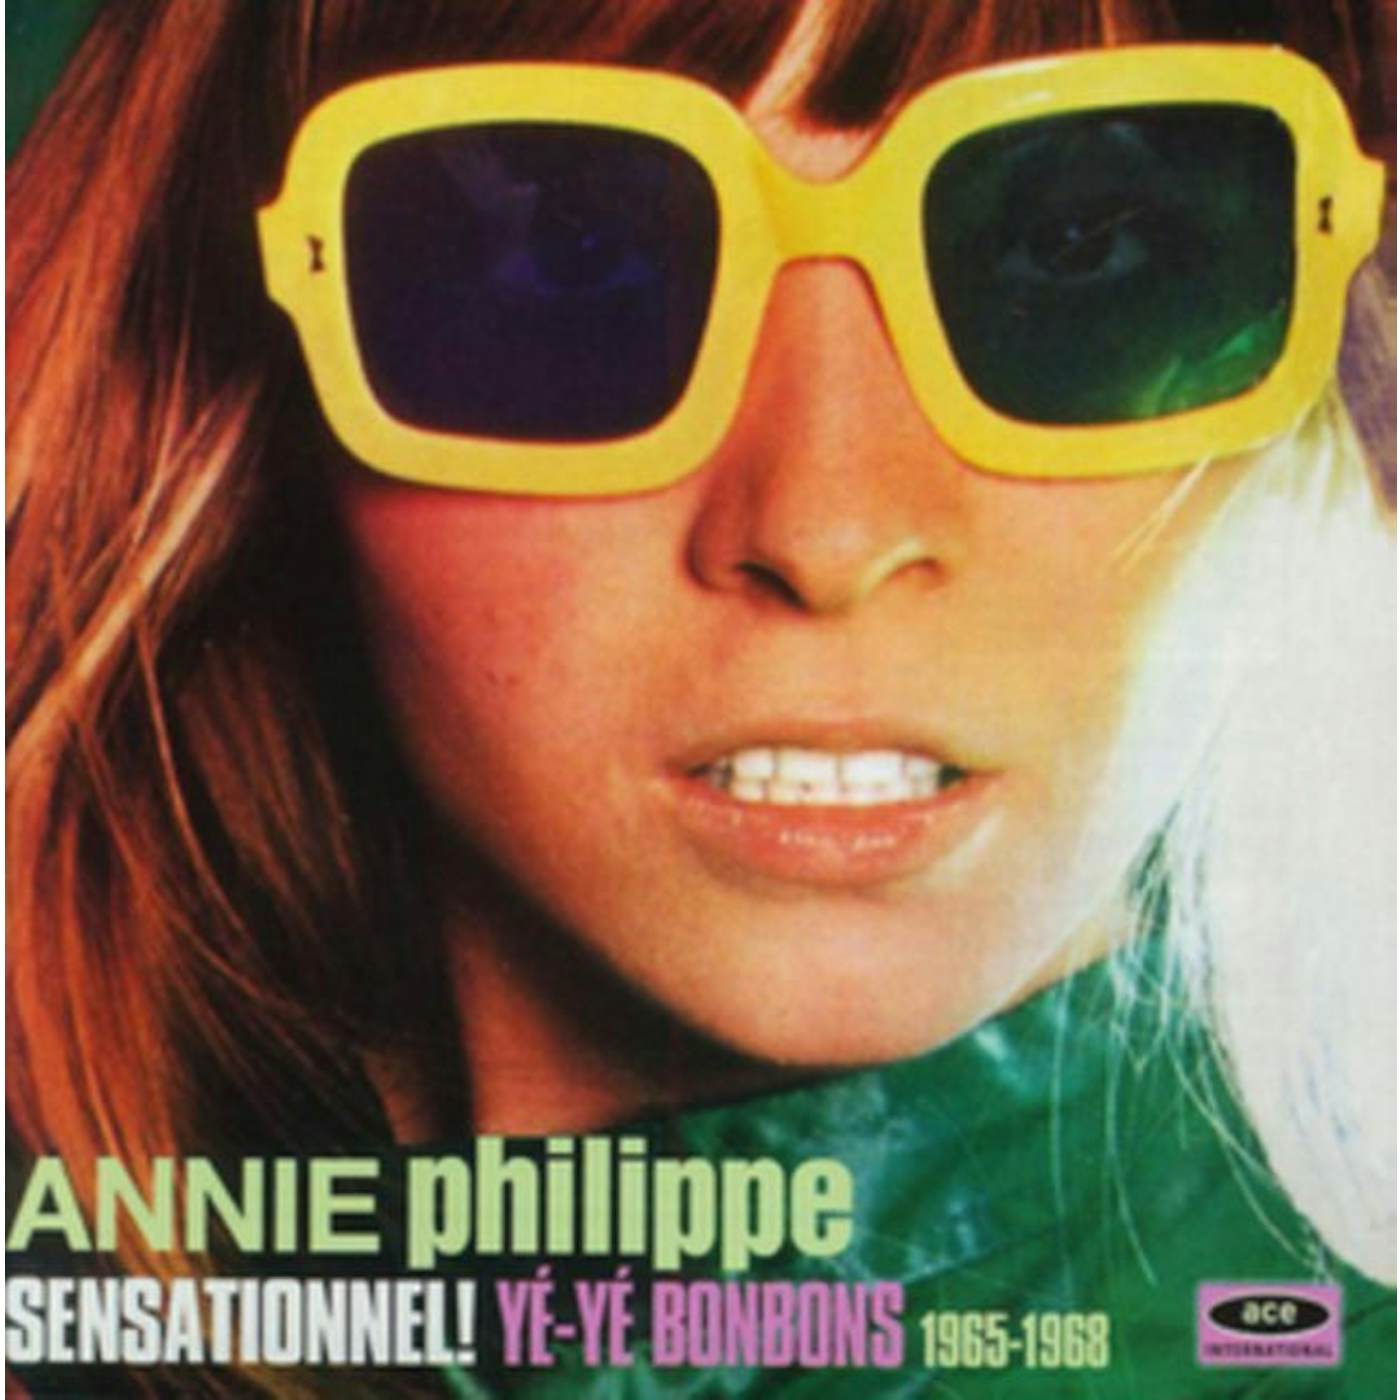 Annie Philippe CD - Sensationnel - Ye-Ye Bonbons 19 65-19 68